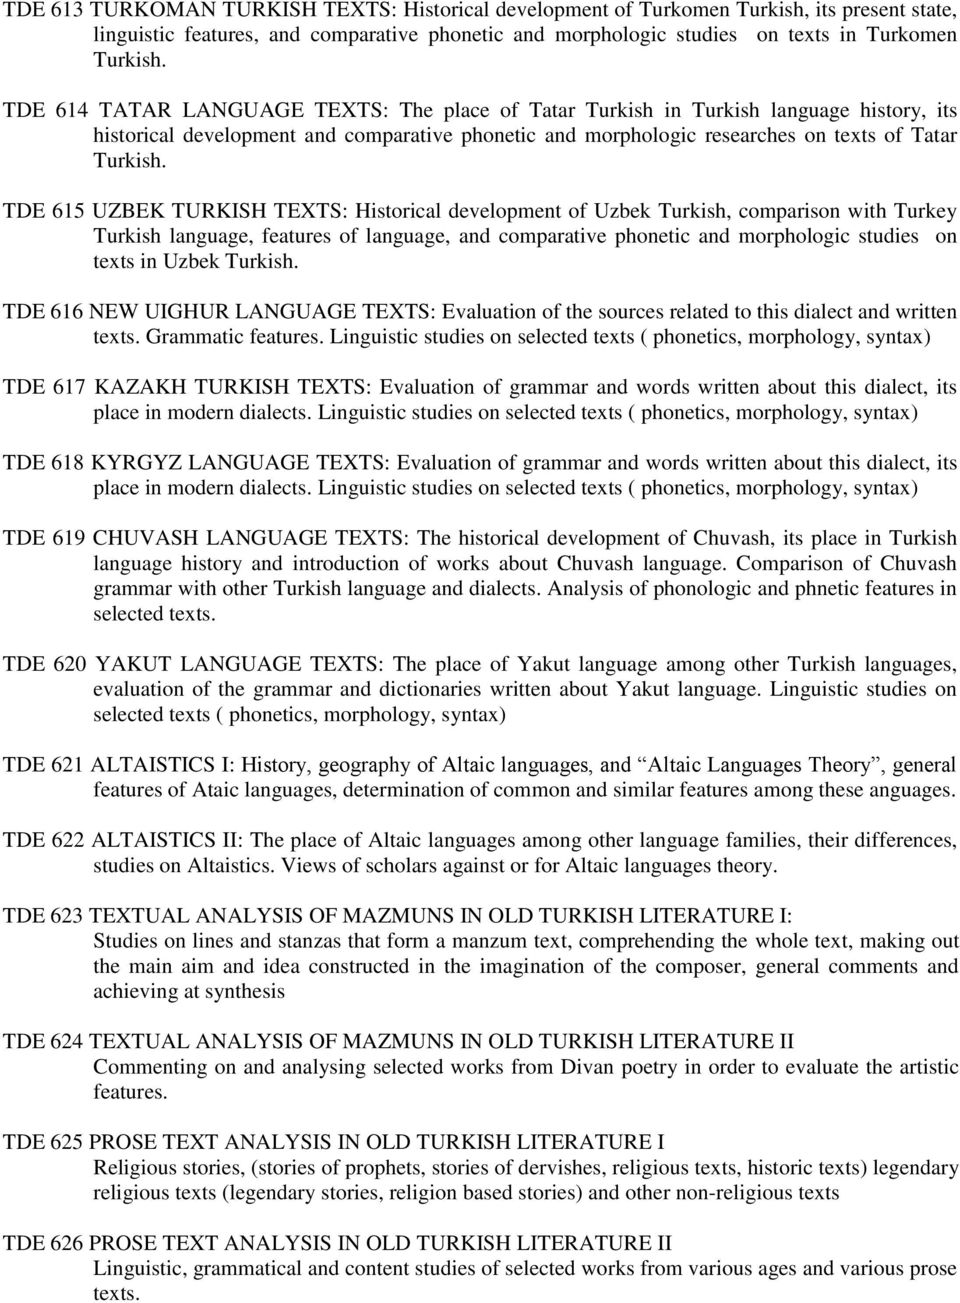 TDE 615 UZBEK TURKISH TEXTS: Historical development of Uzbek Turkish, comparison with Turkey Turkish language, features of language, and comparative phonetic and morphologic studies on texts in Uzbek